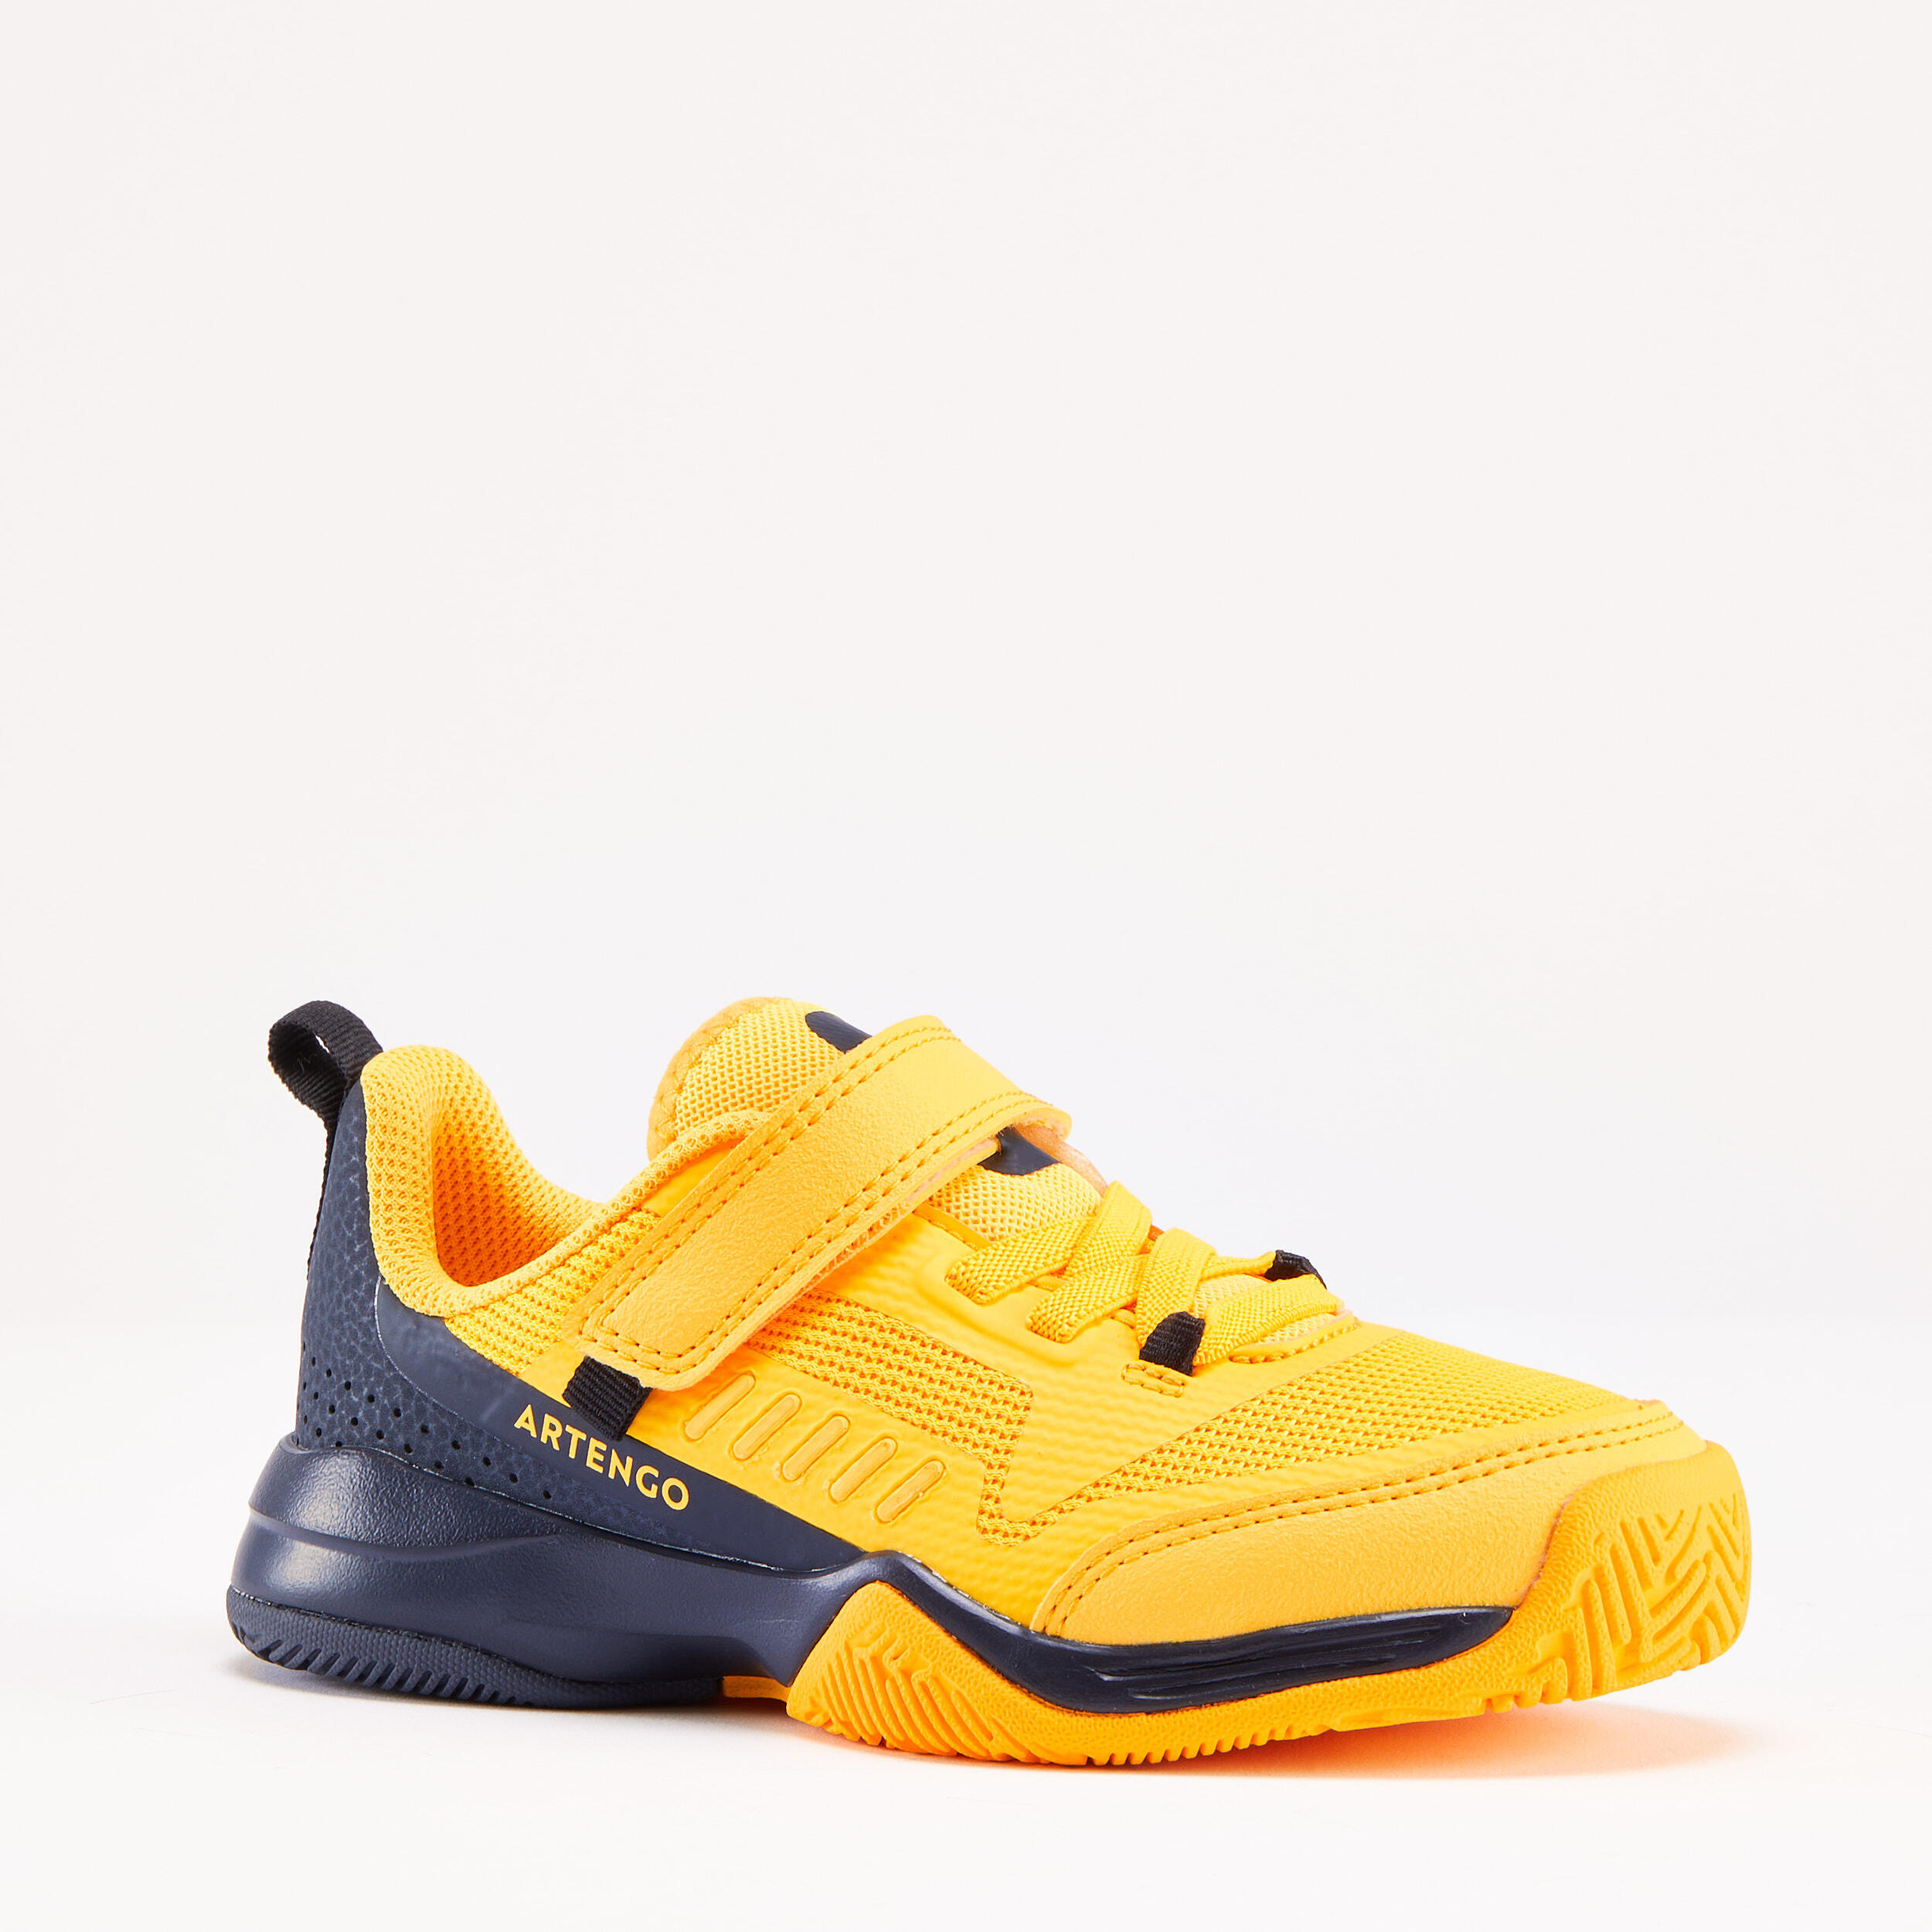 Kids' Rip-Tab Tennis Shoes TS500 Fast KD - Sunfire 2/9